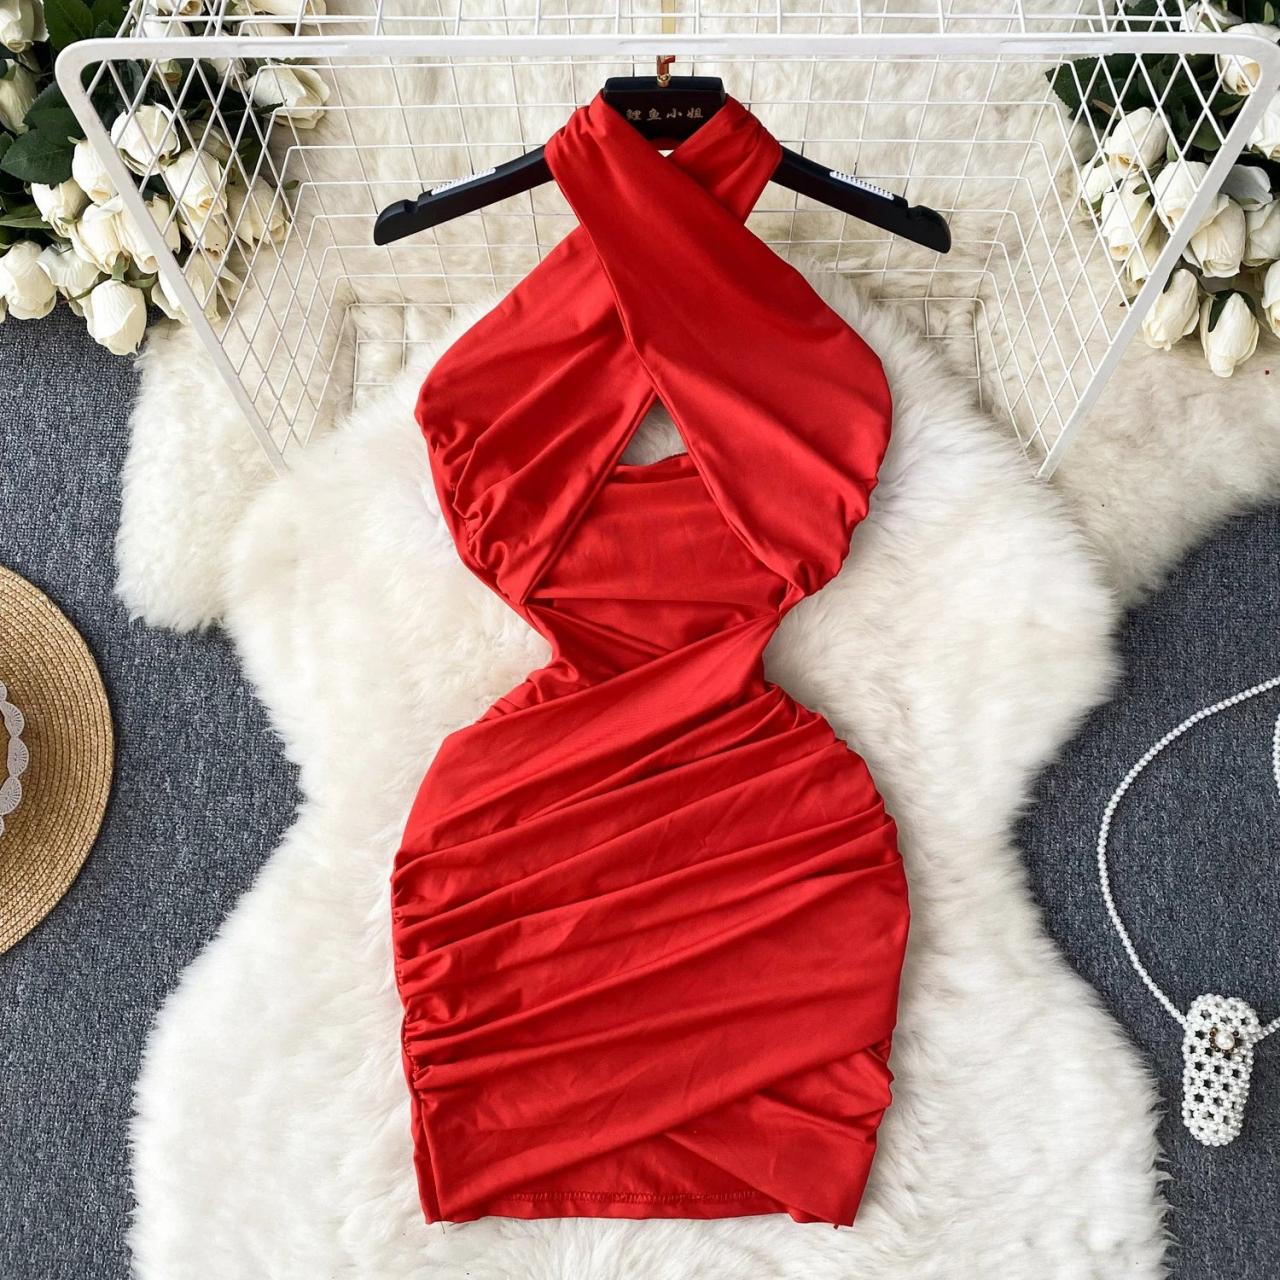 Elegant Red Halter Neck Cocktail Party Dress Women